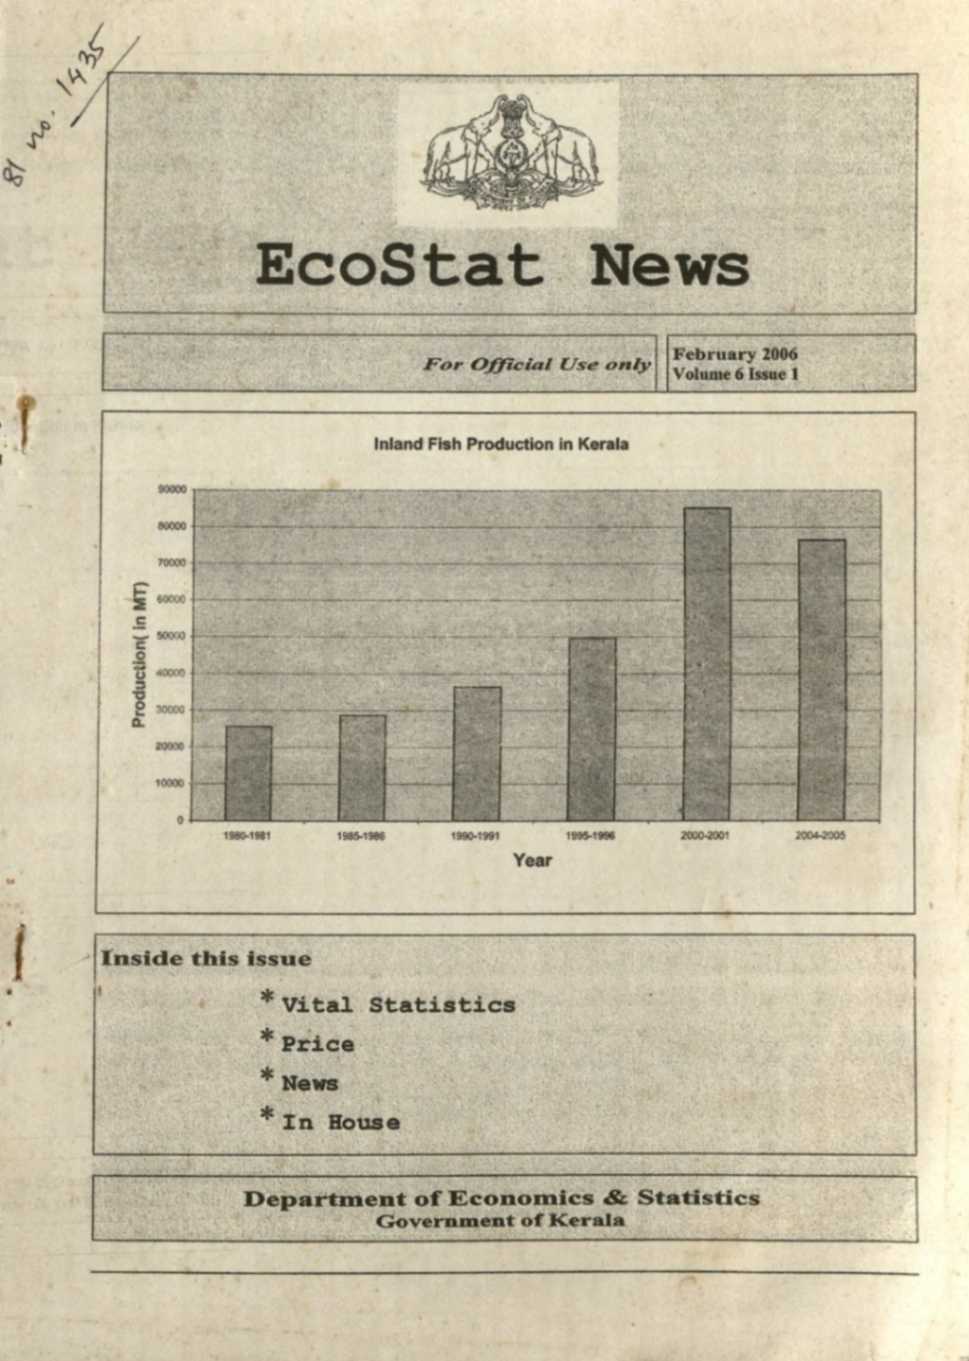 Ecostat News February 2006